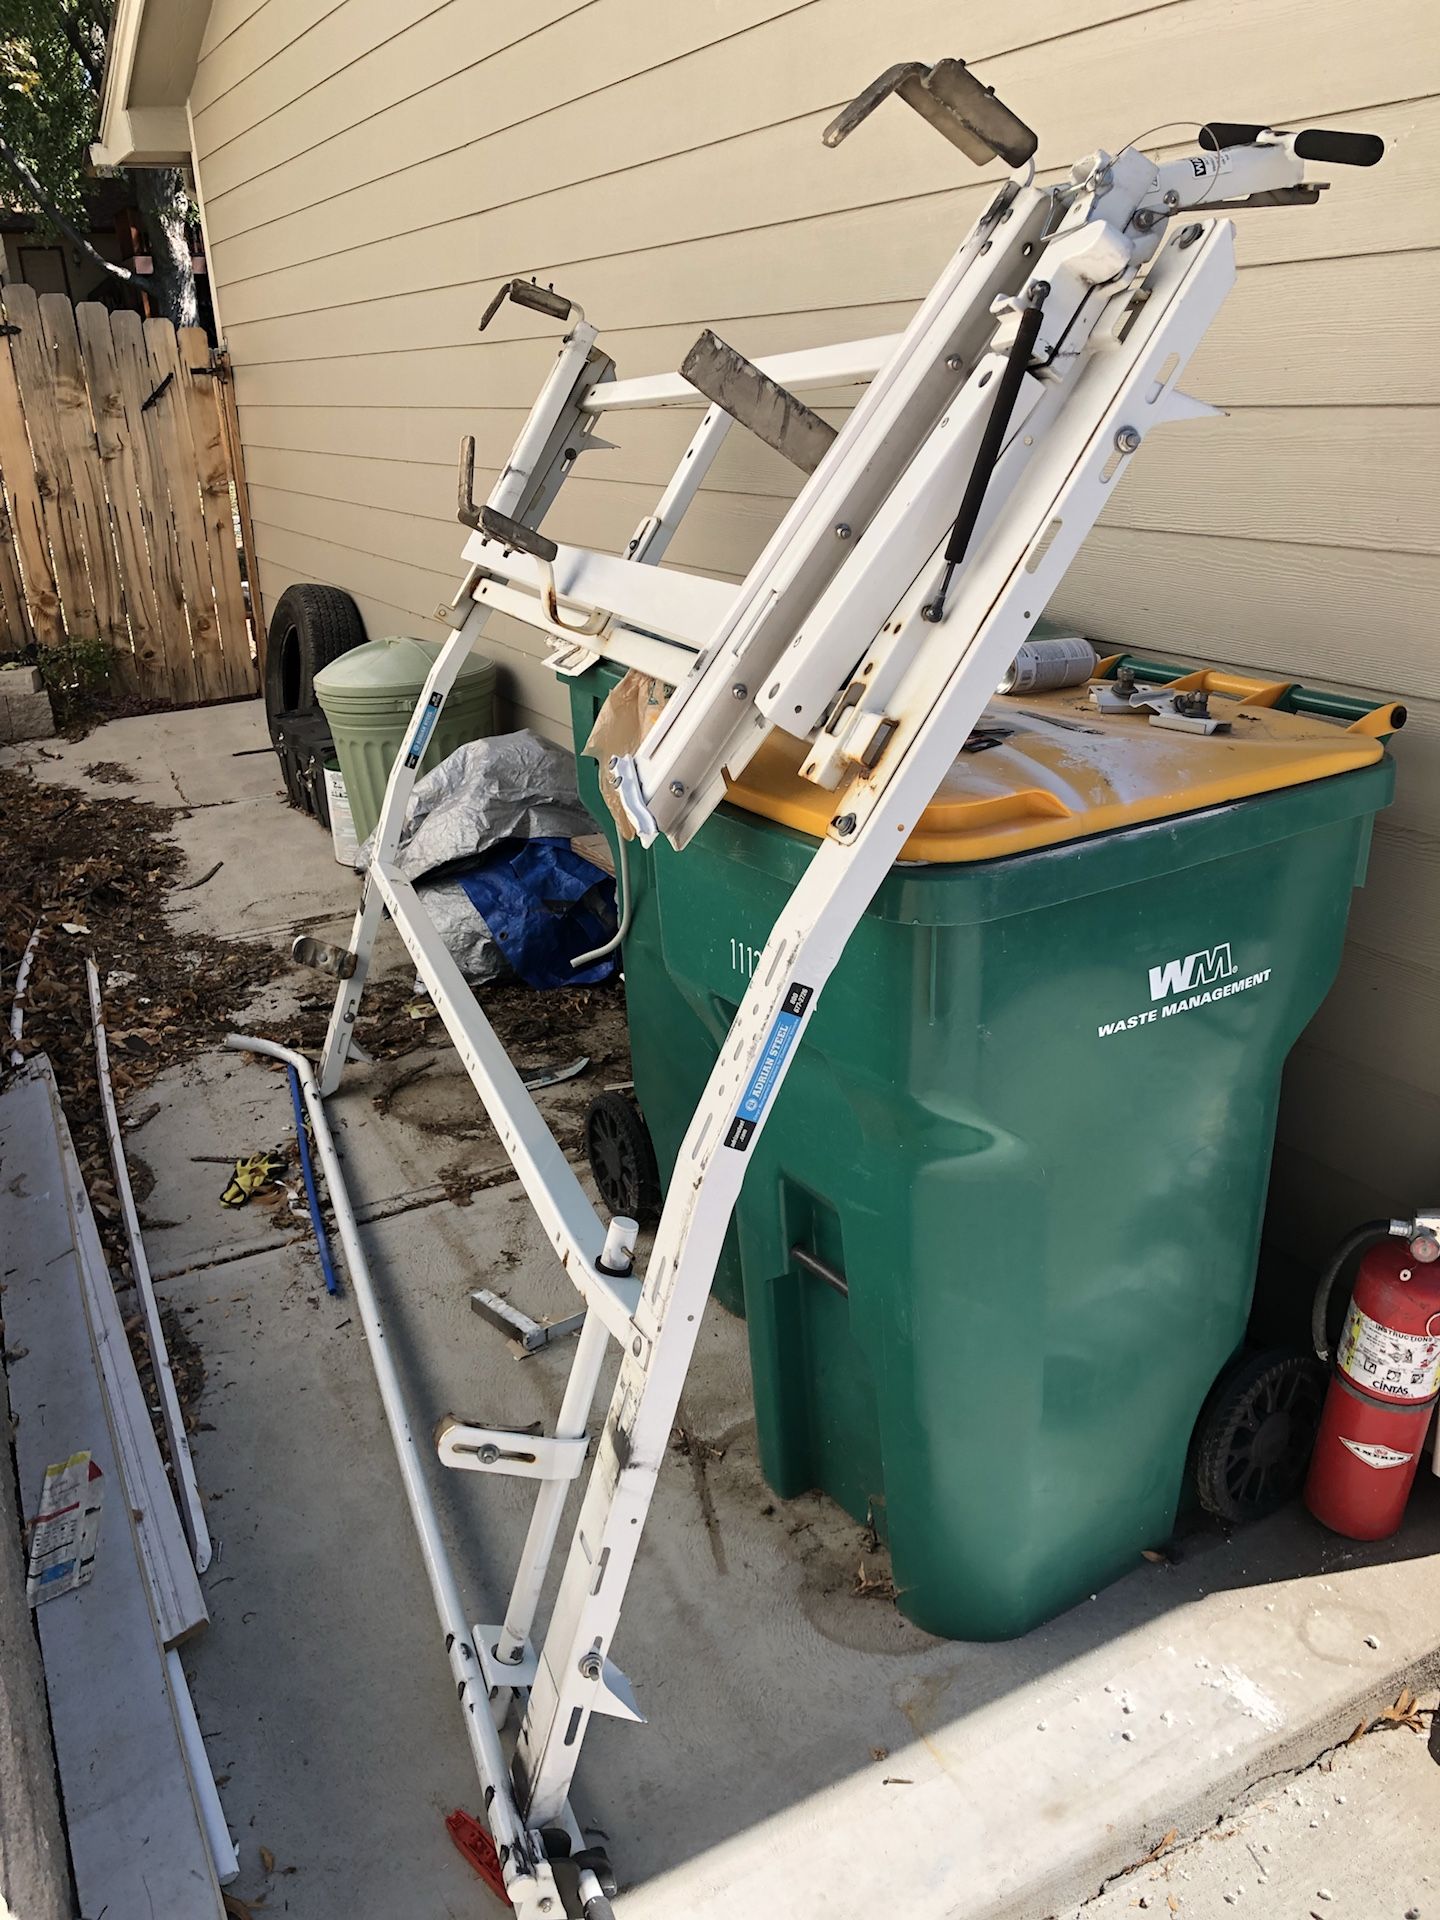 Drop down ladder rack